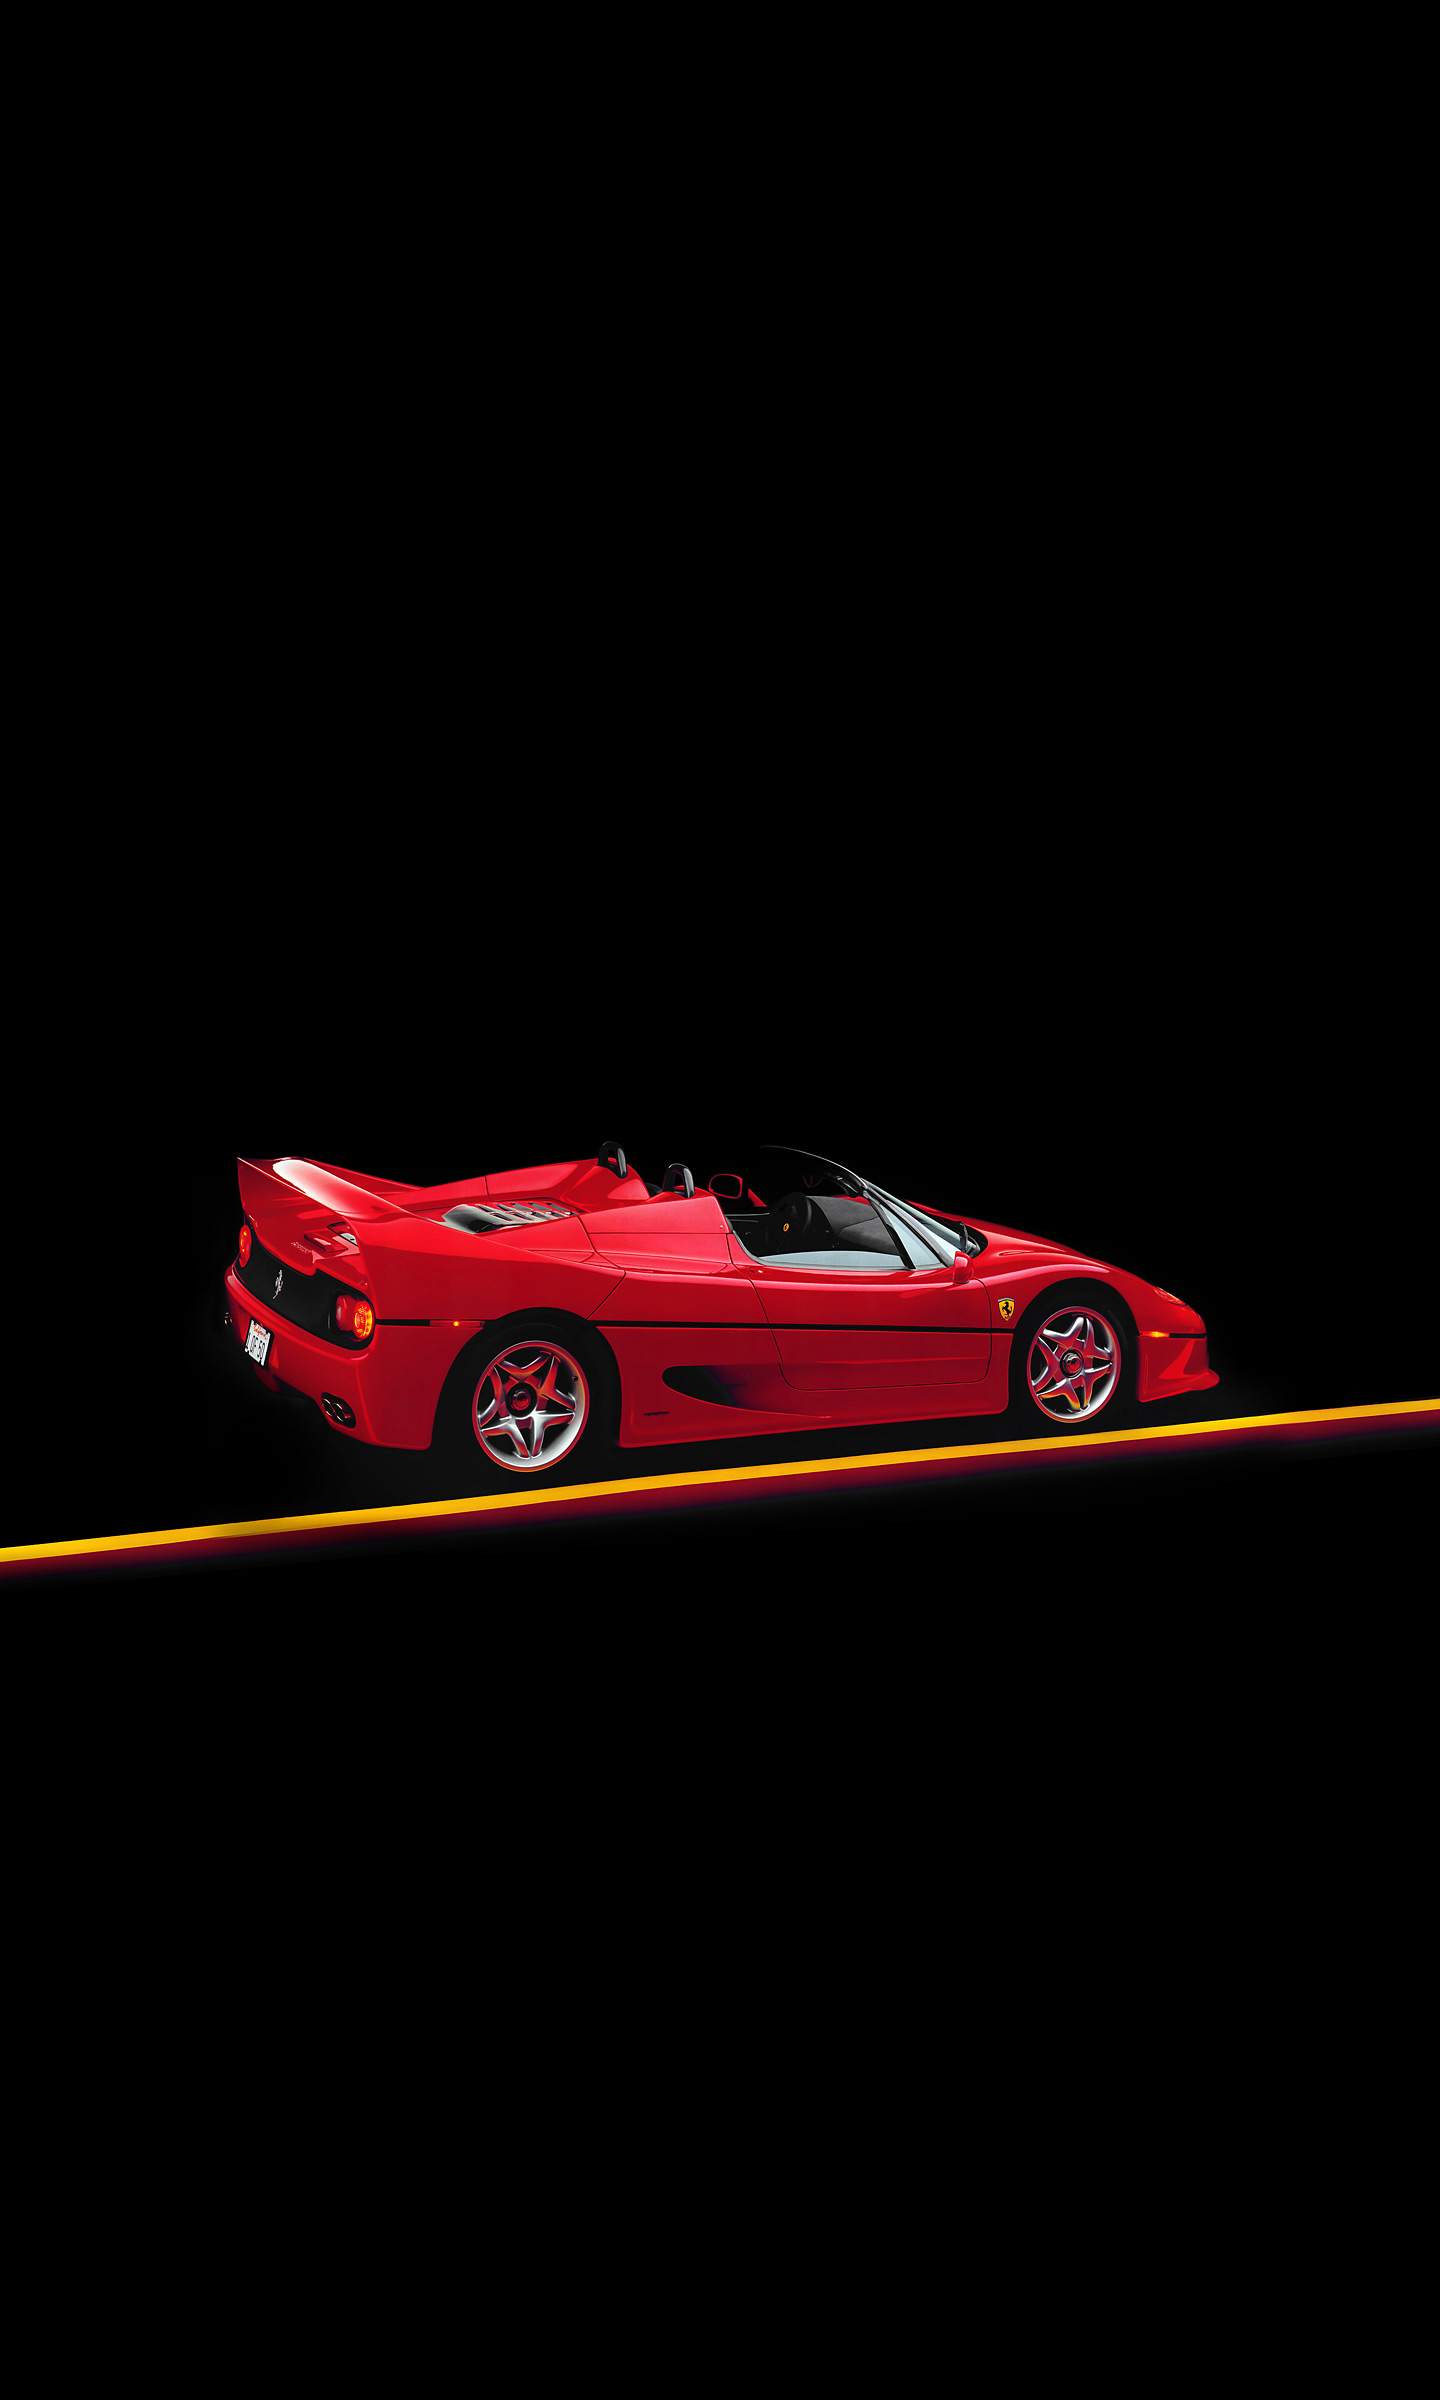  1995 Ferrari F50 Wallpaper.